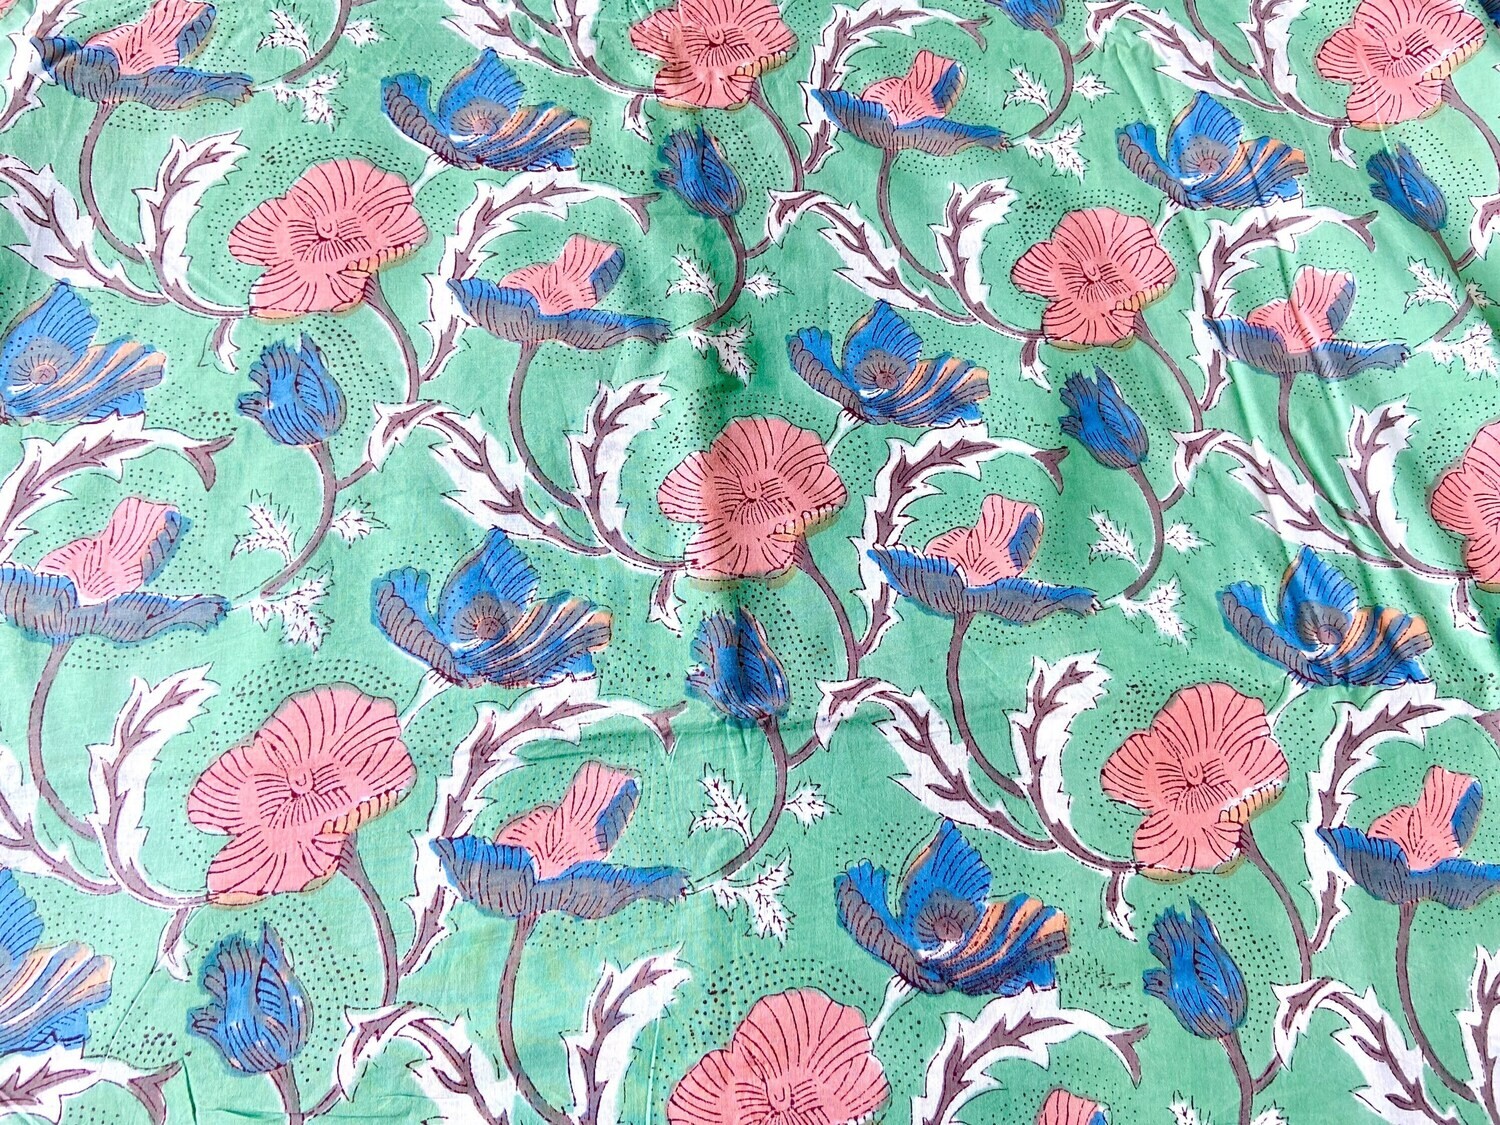 Green Floral Hand Block Print Fabric, 100% Cotton, Lightweight, Big Flower Print, Medium Opacity, 44 Inches Wide